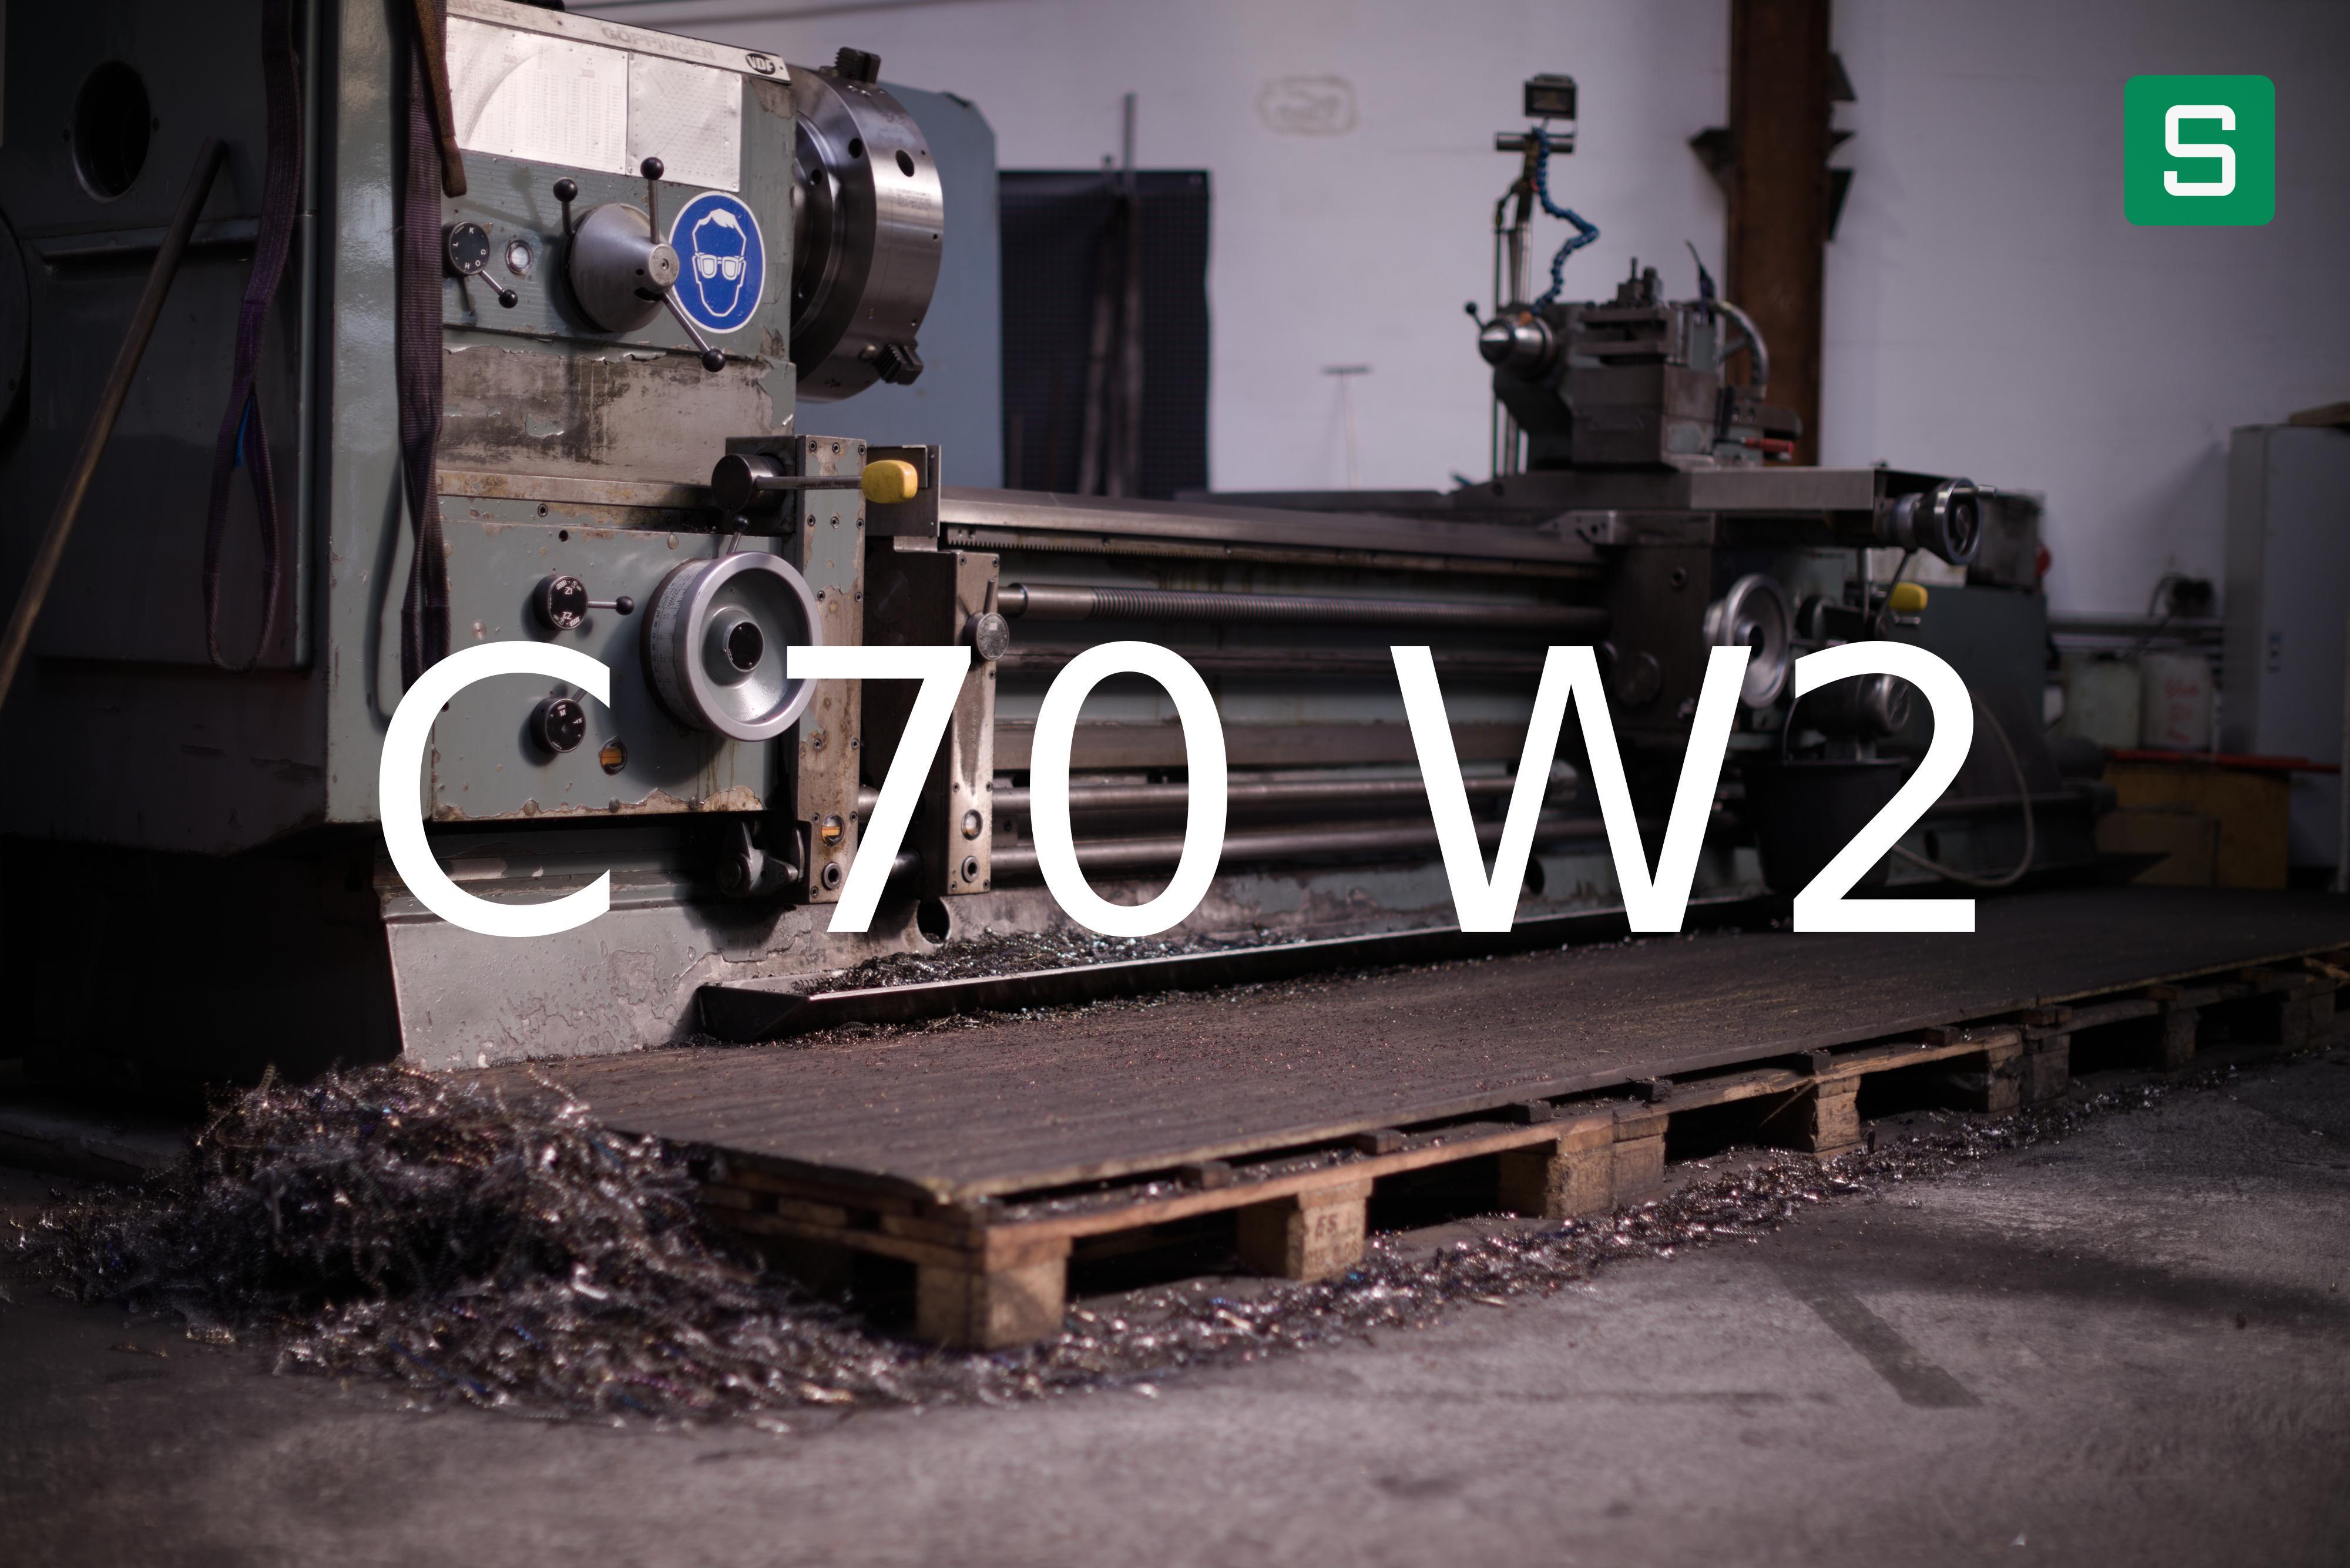 Steel Material: C 70 W2